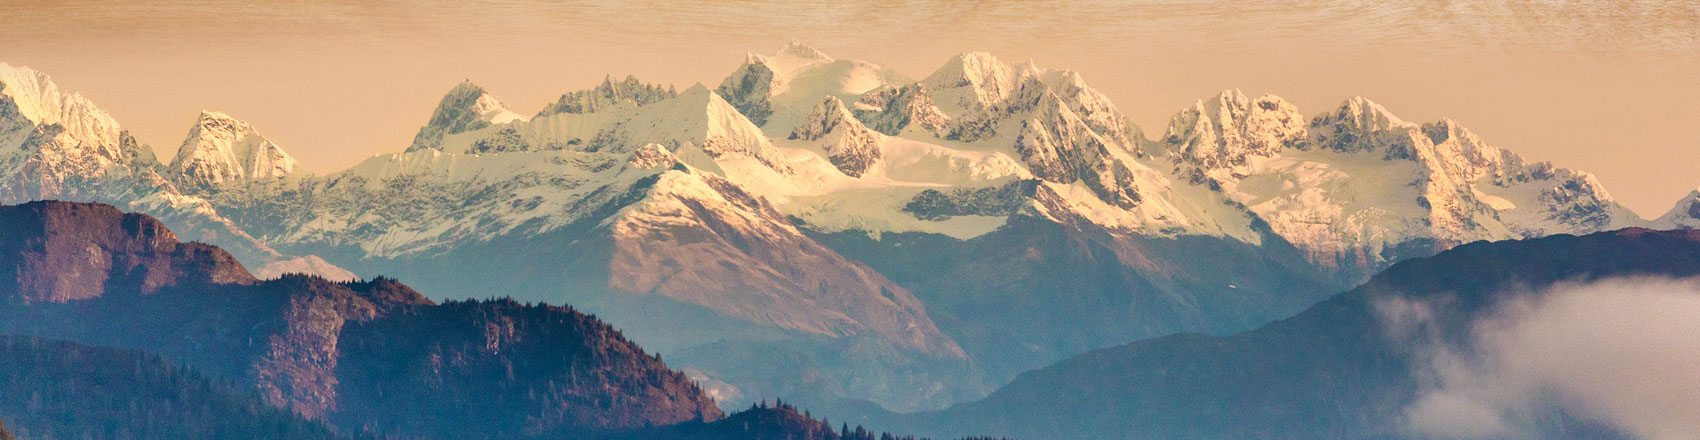 Alaska Mountain background.